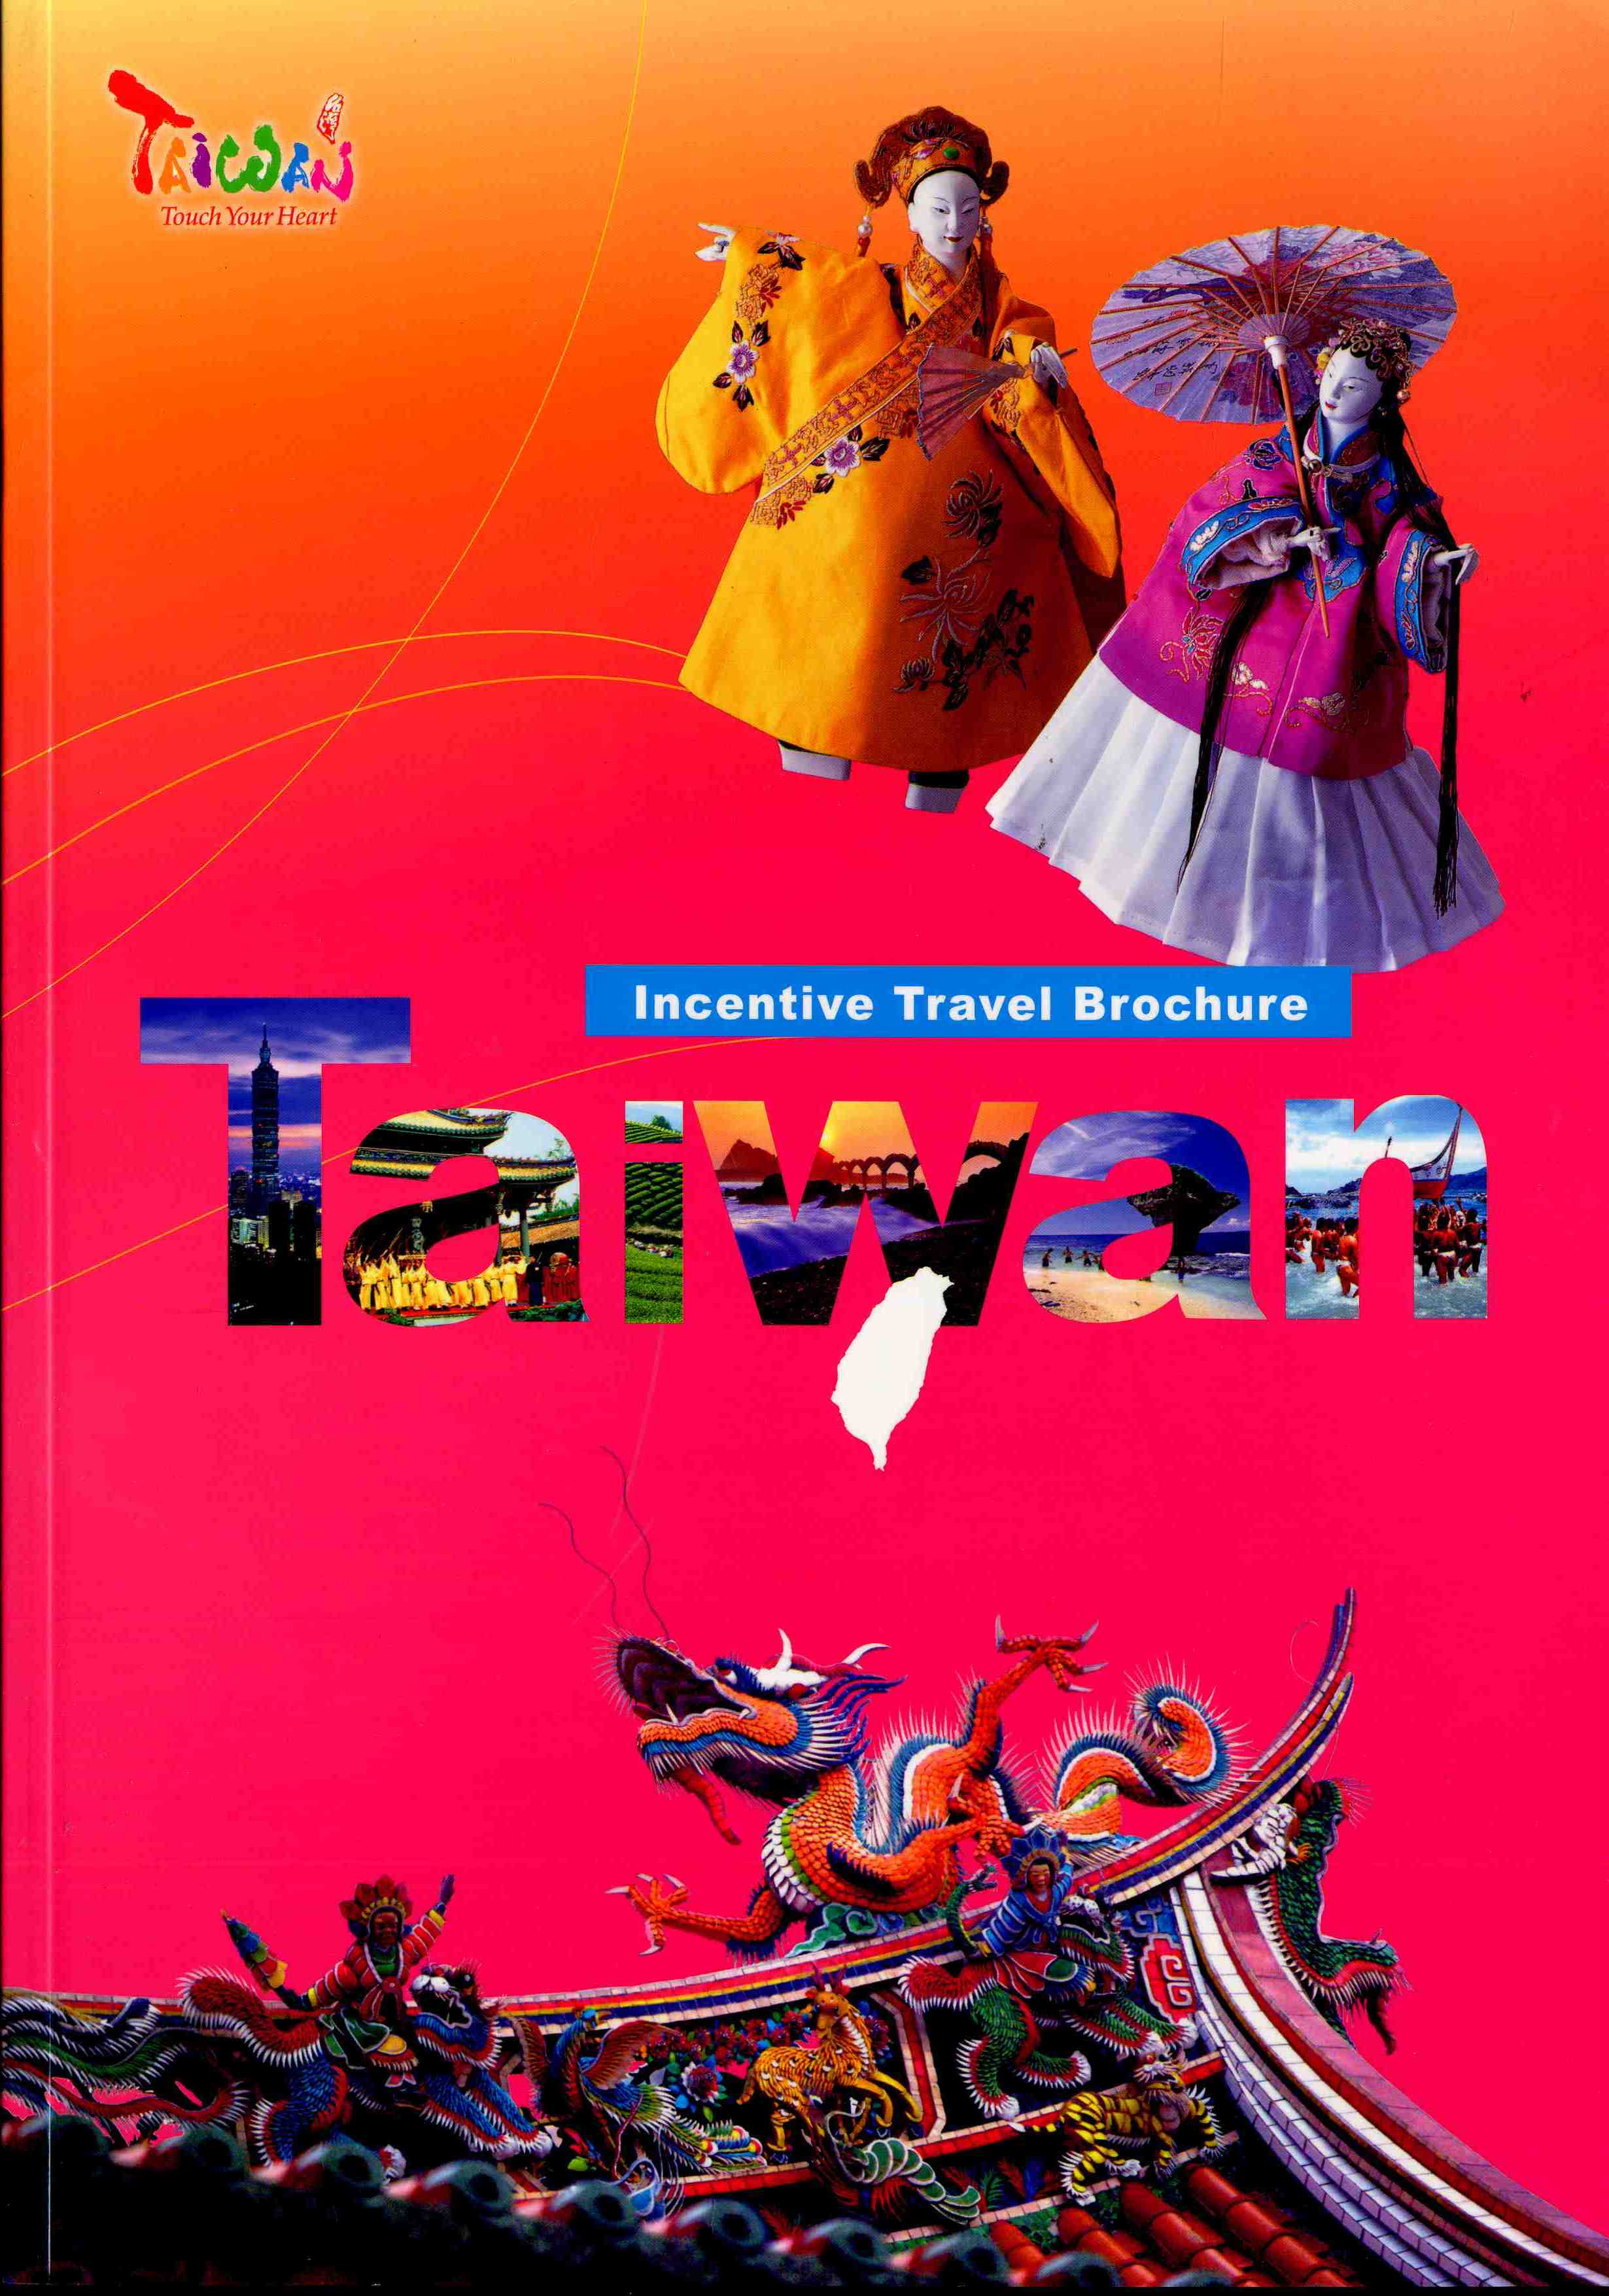 Taiwan Incentive Travel Brochure